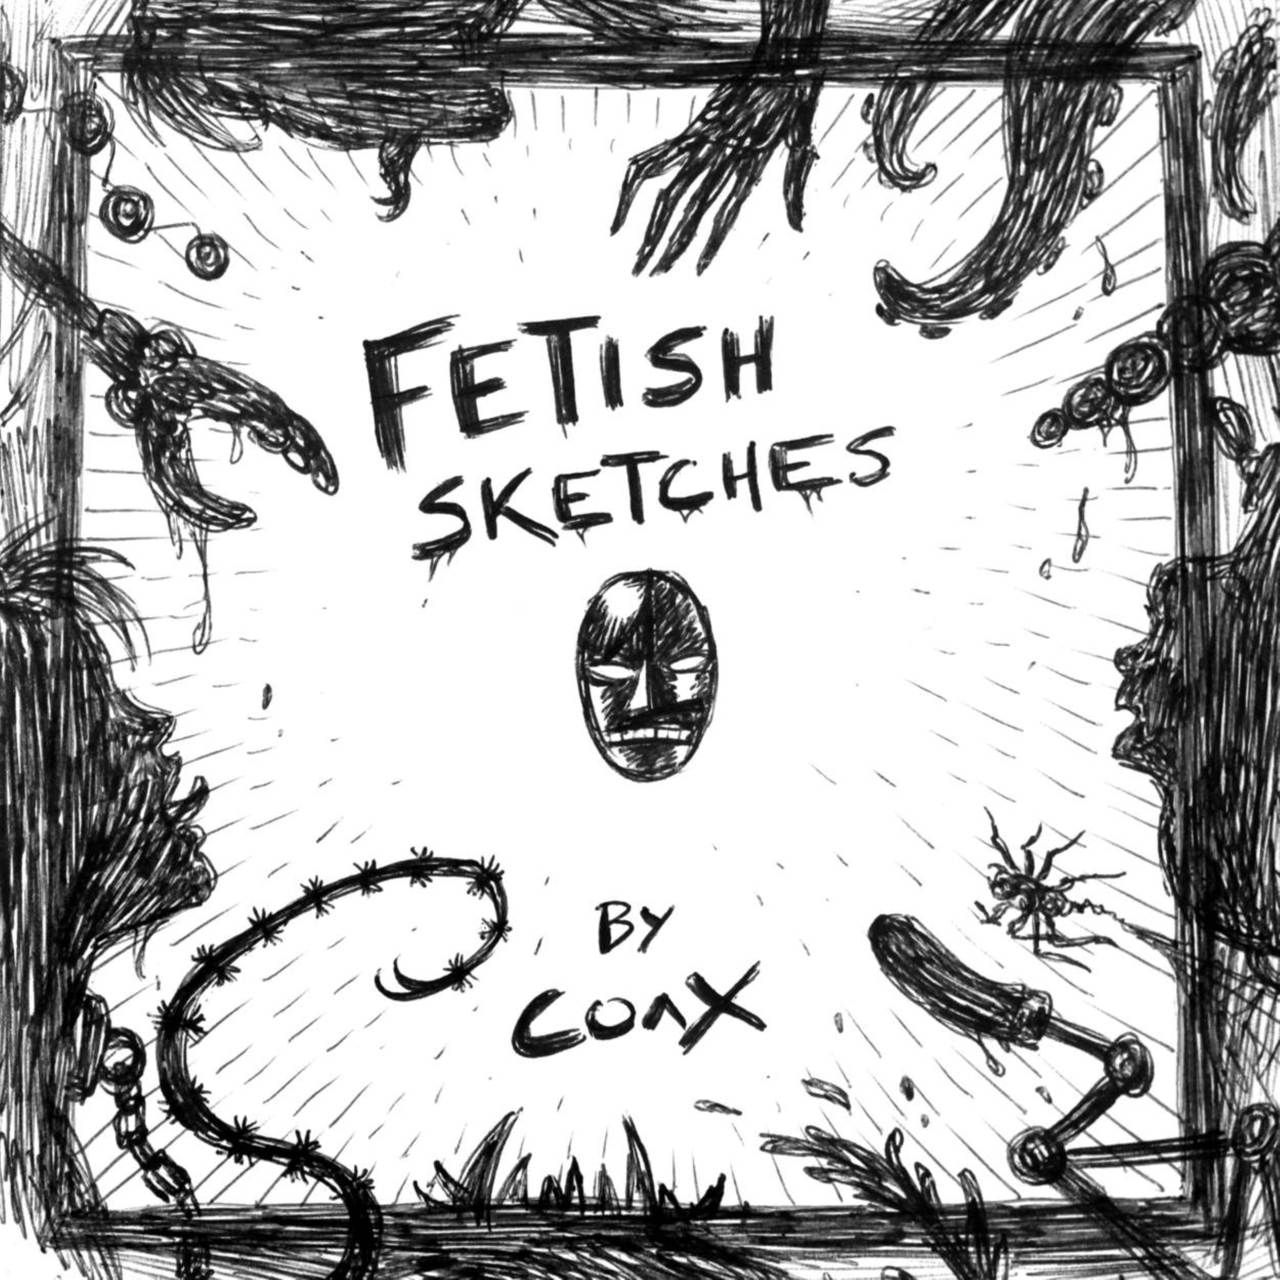 [Coax] Fetish Sketches 5